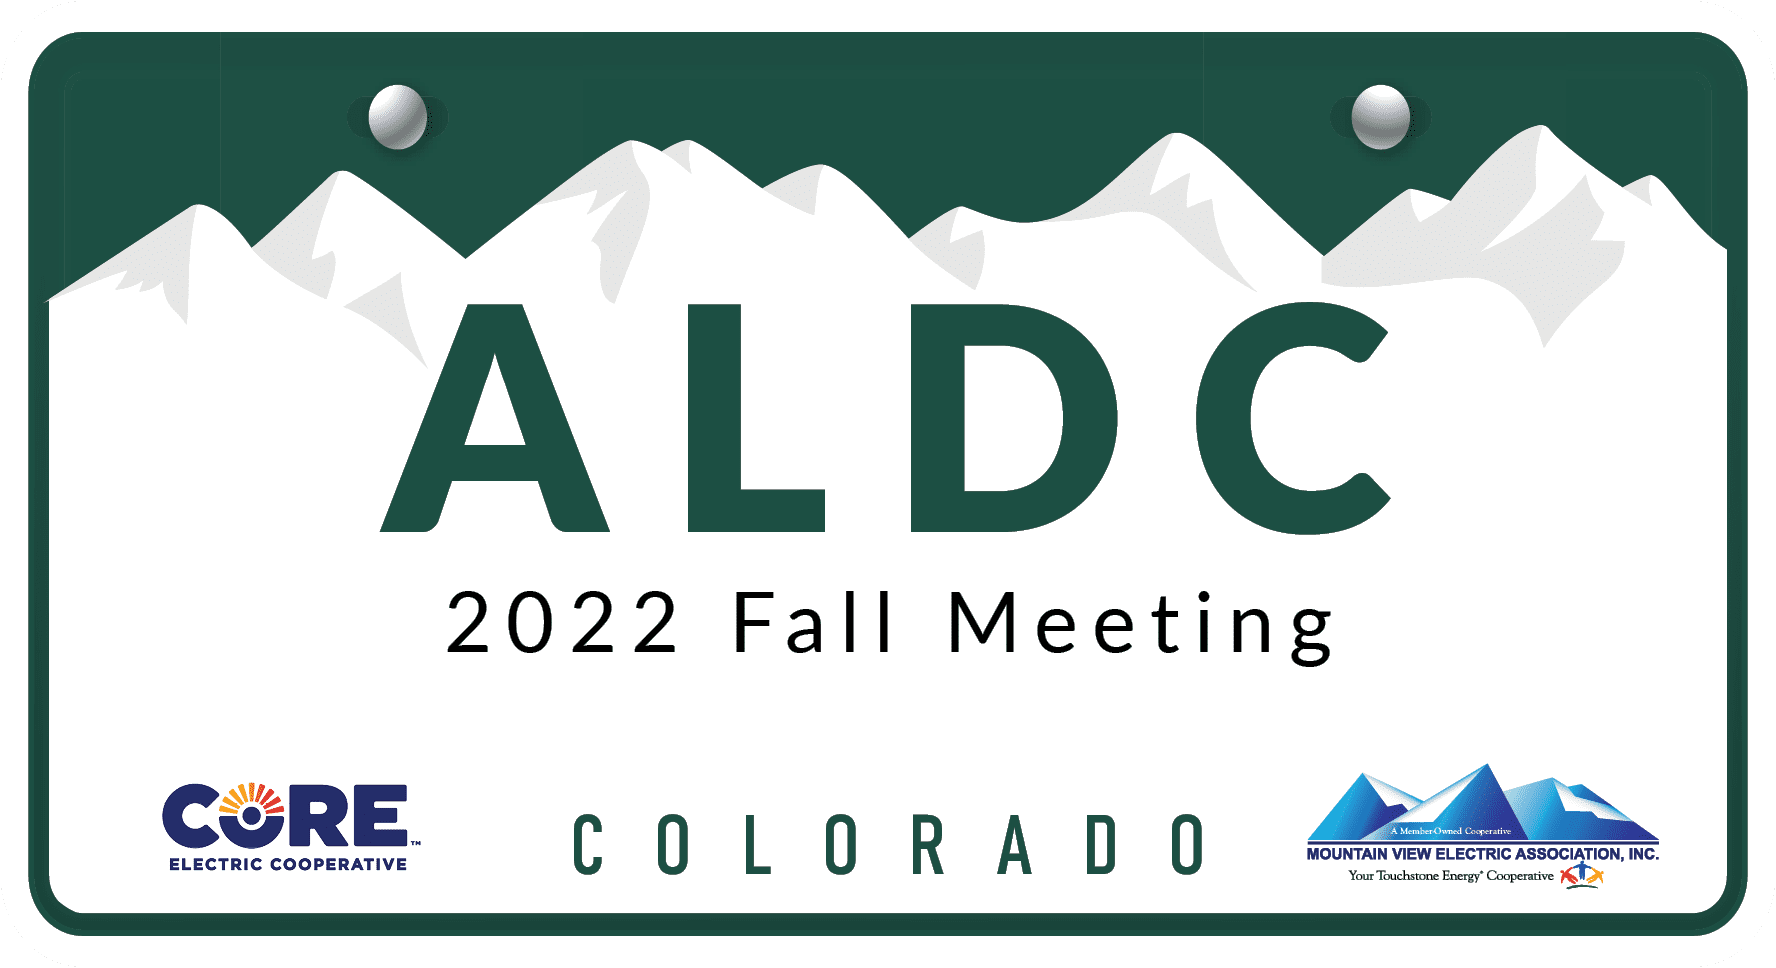 ALDC Fall Meeting 2022